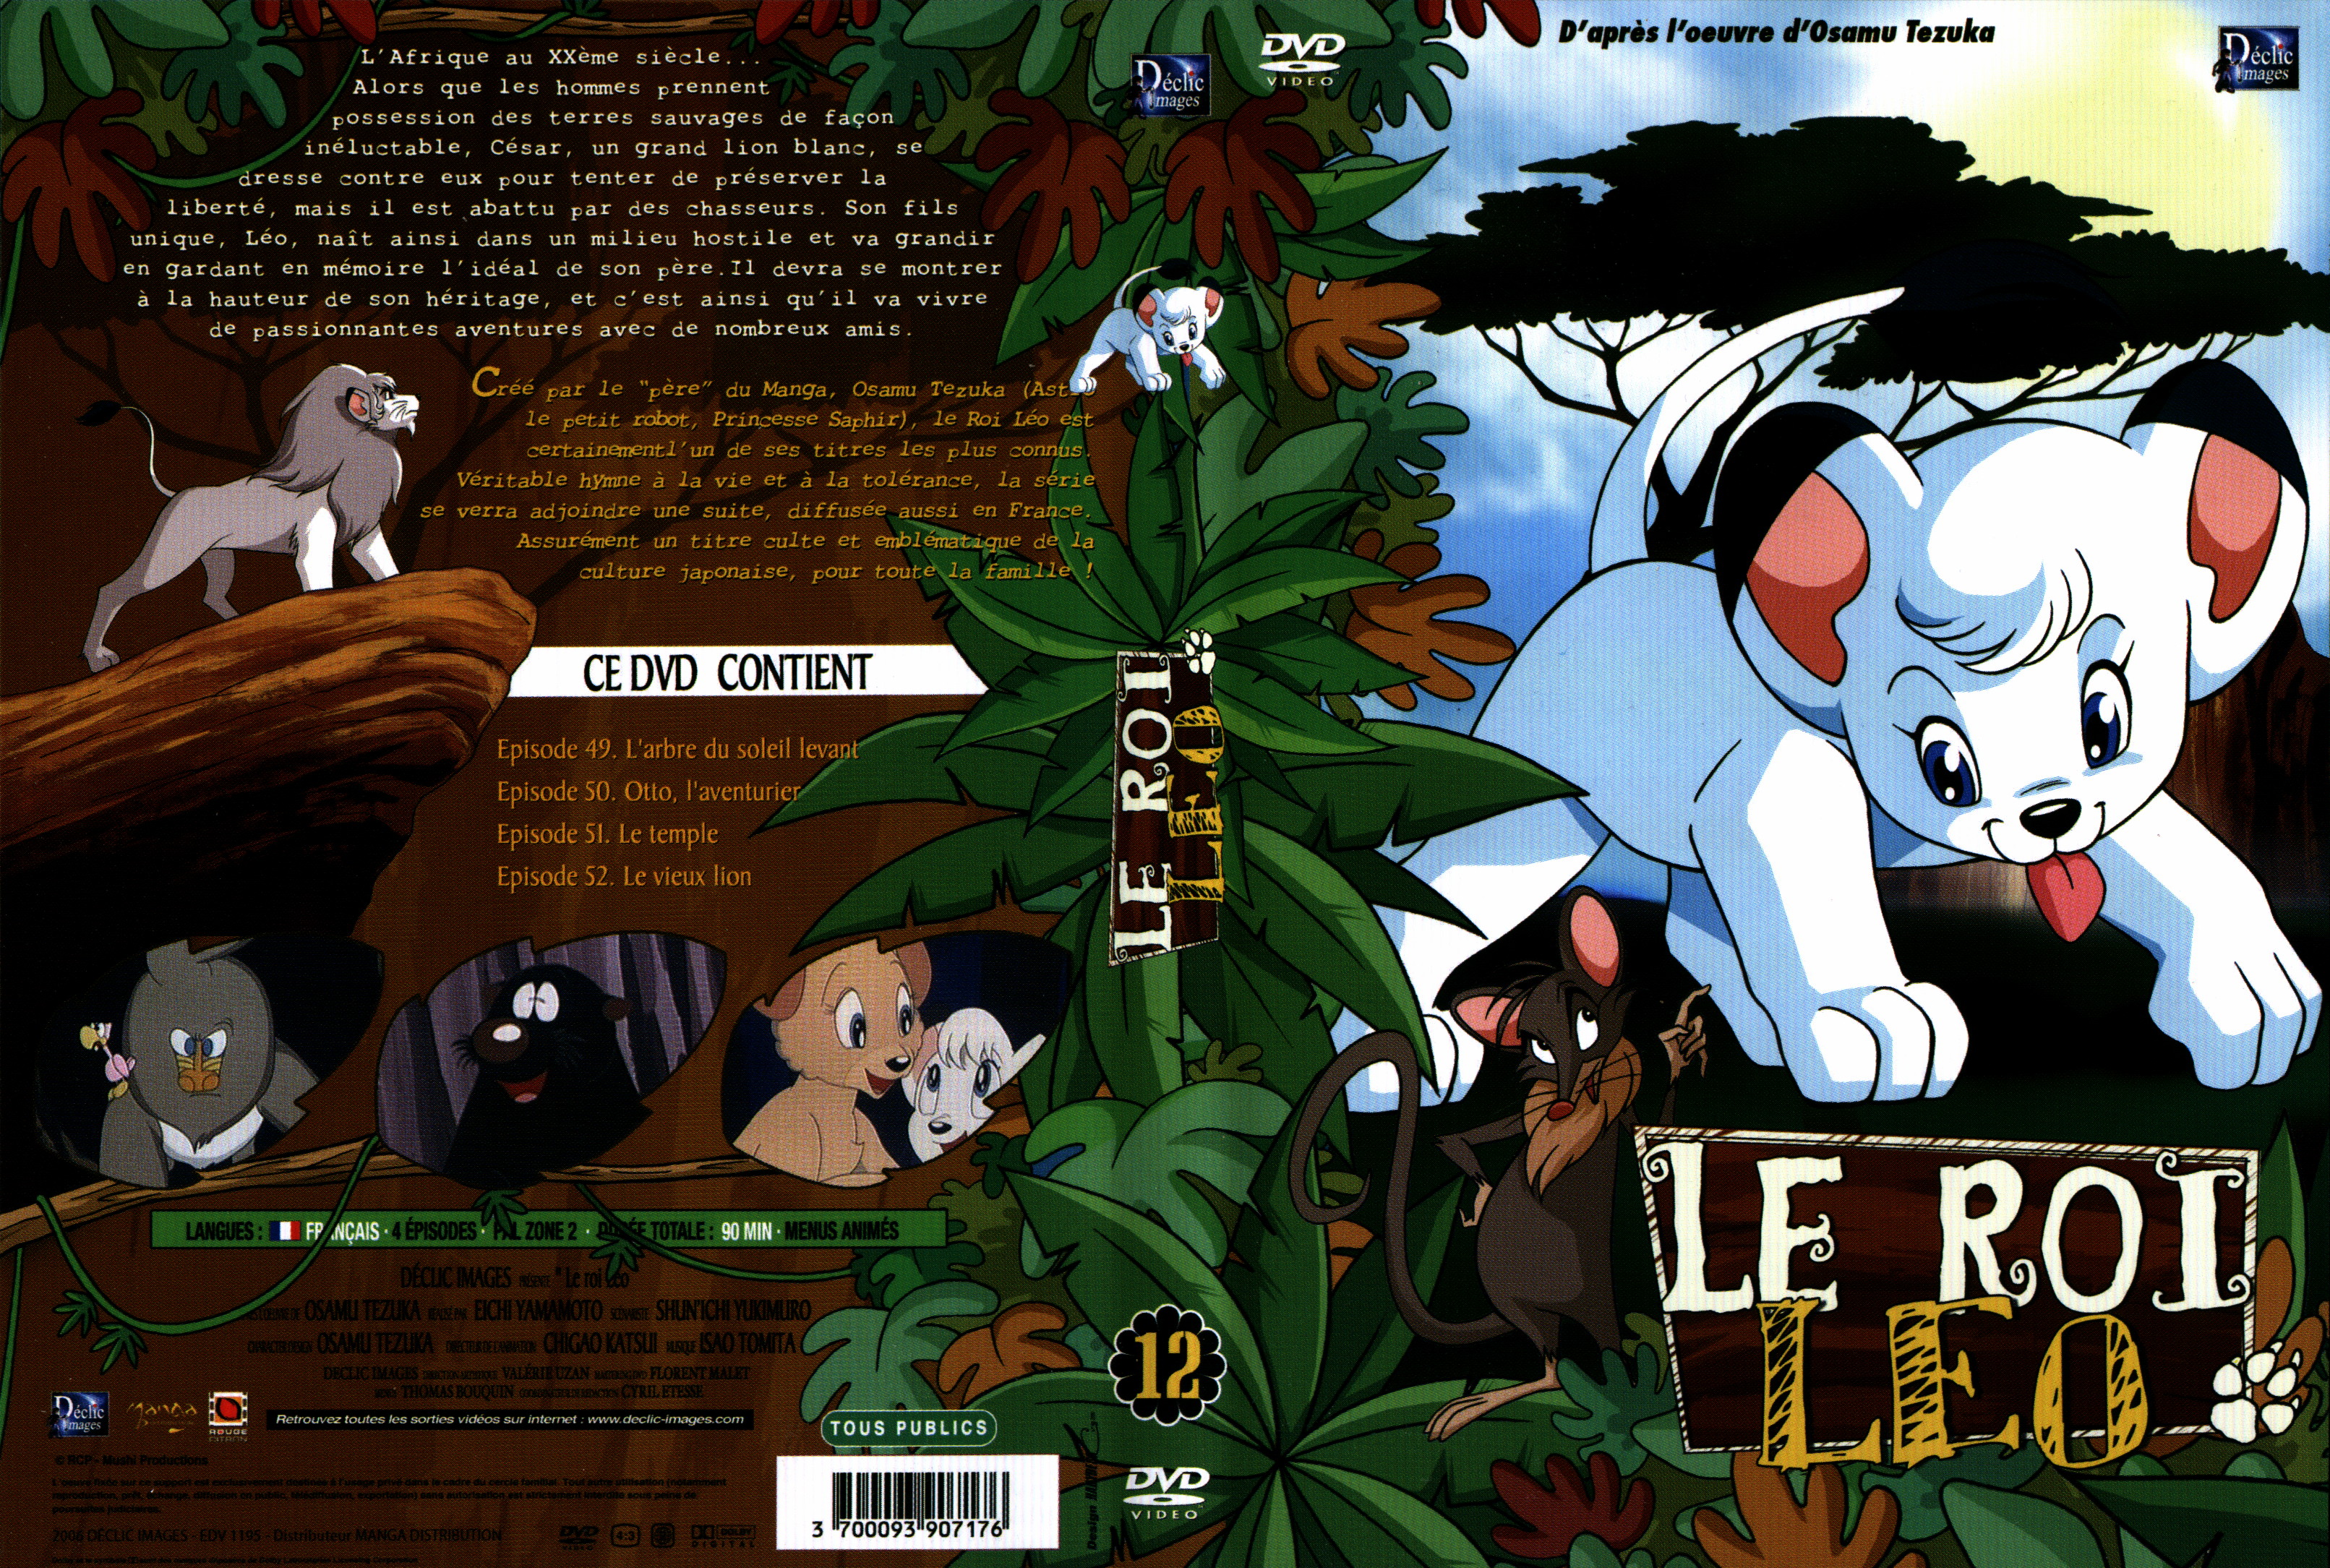 Jaquette DVD Le roi Leo vol 12